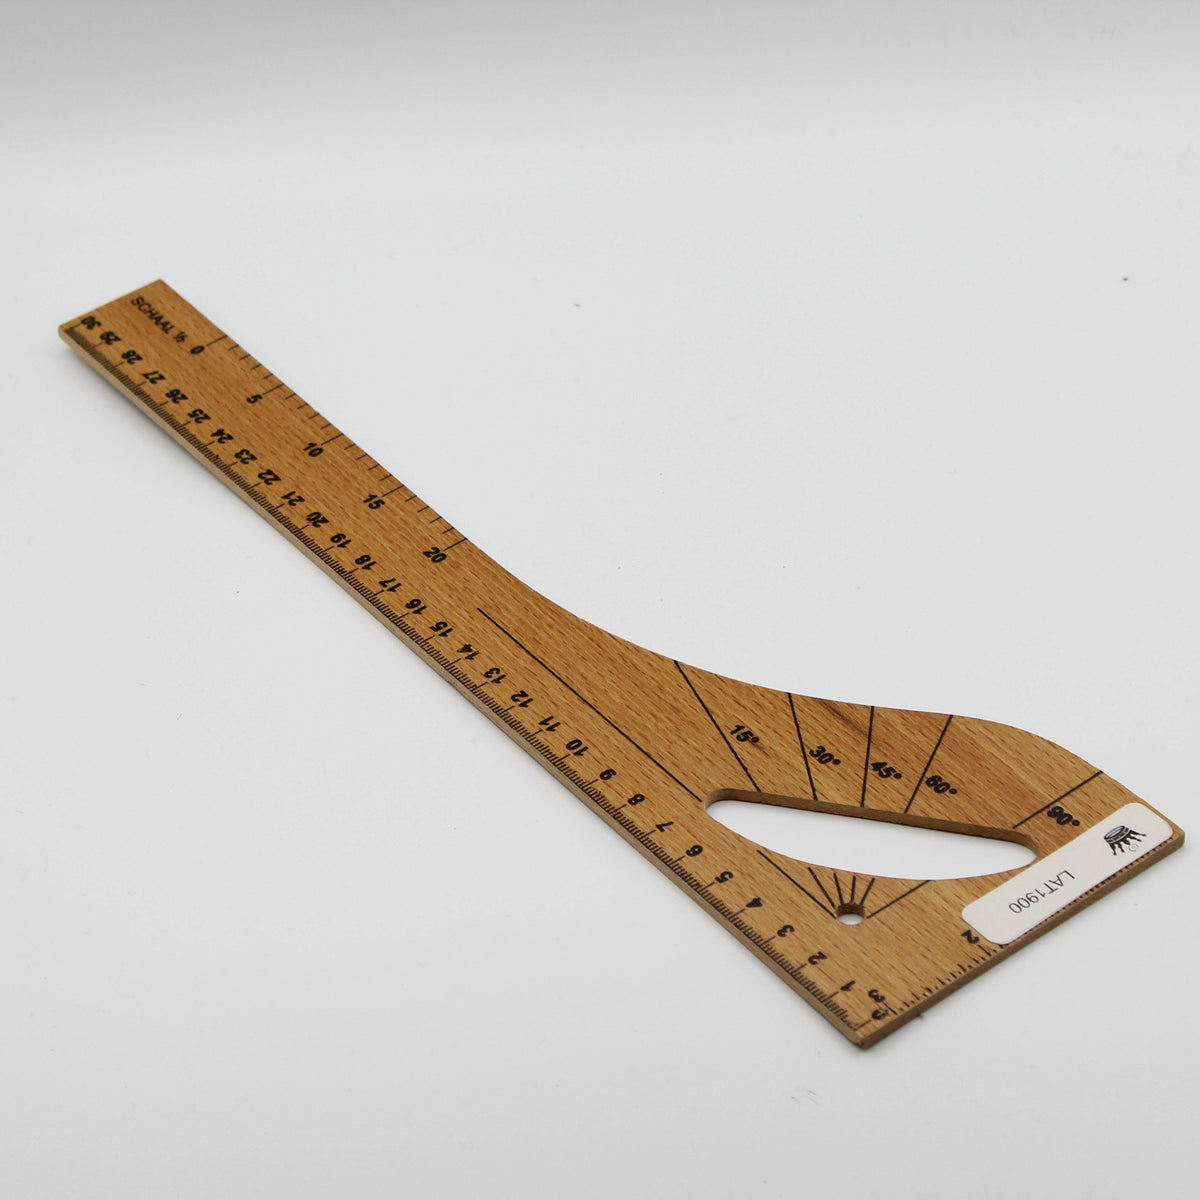 Short 6 Wood Craft Ruler - 1-1/8 Wide x 6 Long [#3094] - $0.4900